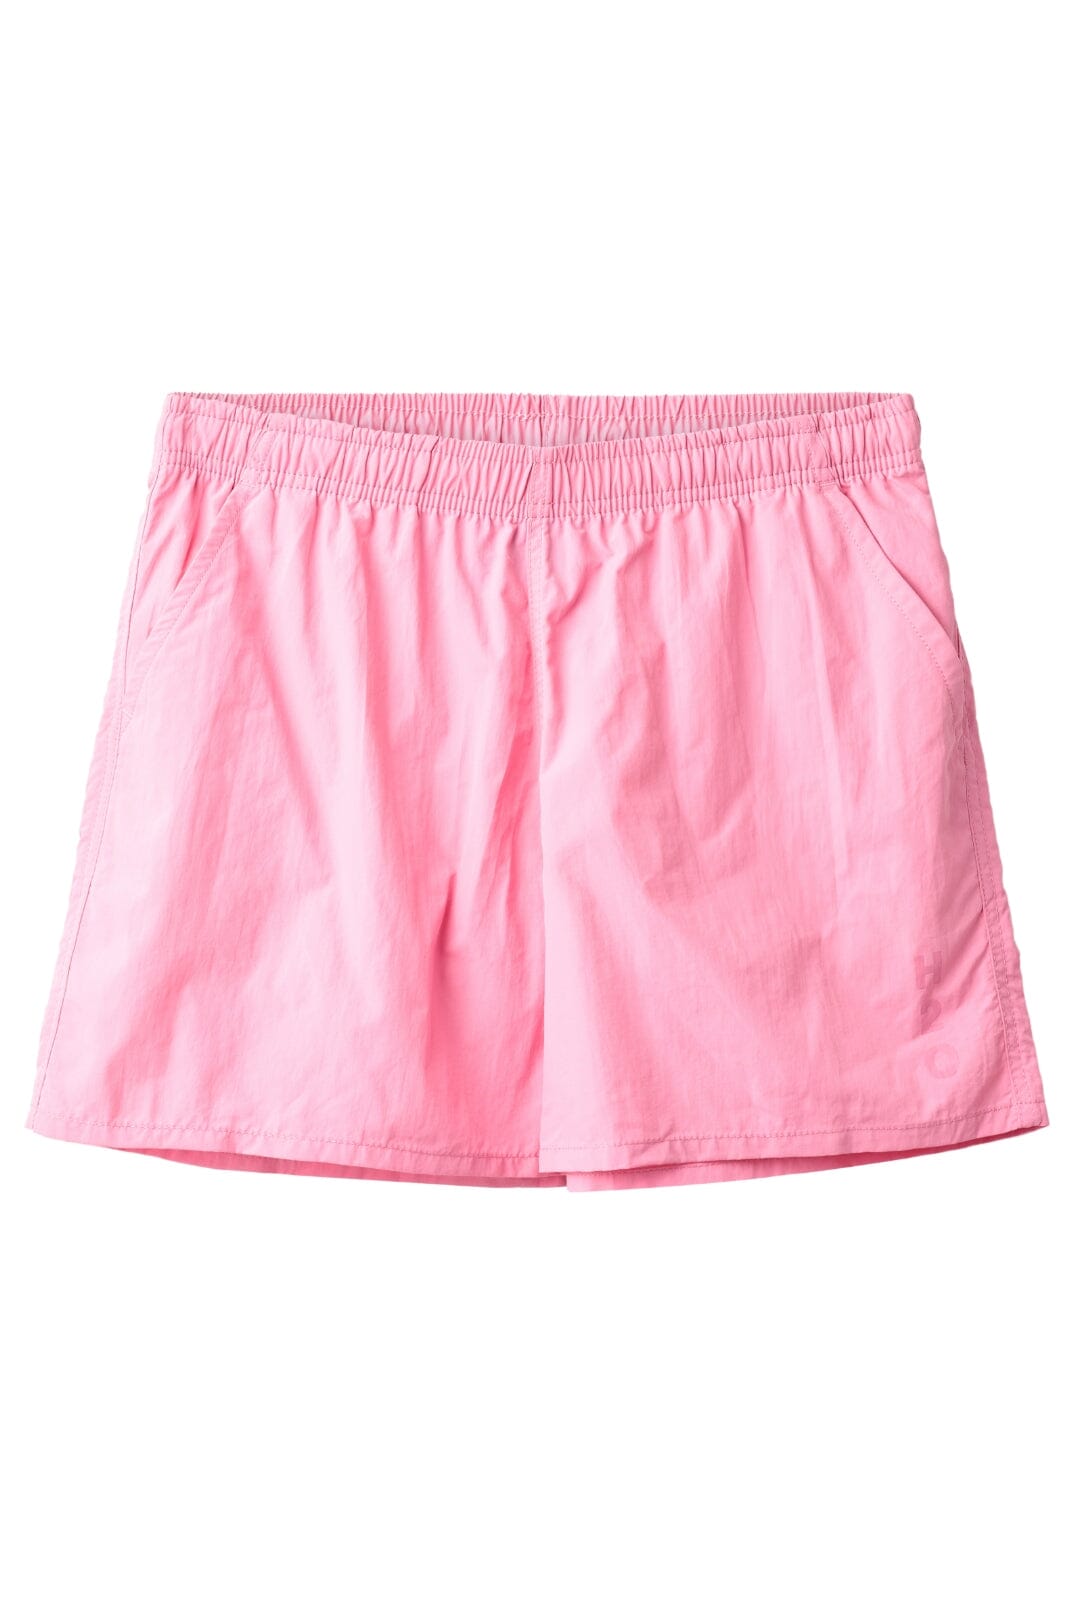 H2O - Leisure Woman Swim Shorts - 2025 Sachet Pink Shorts 